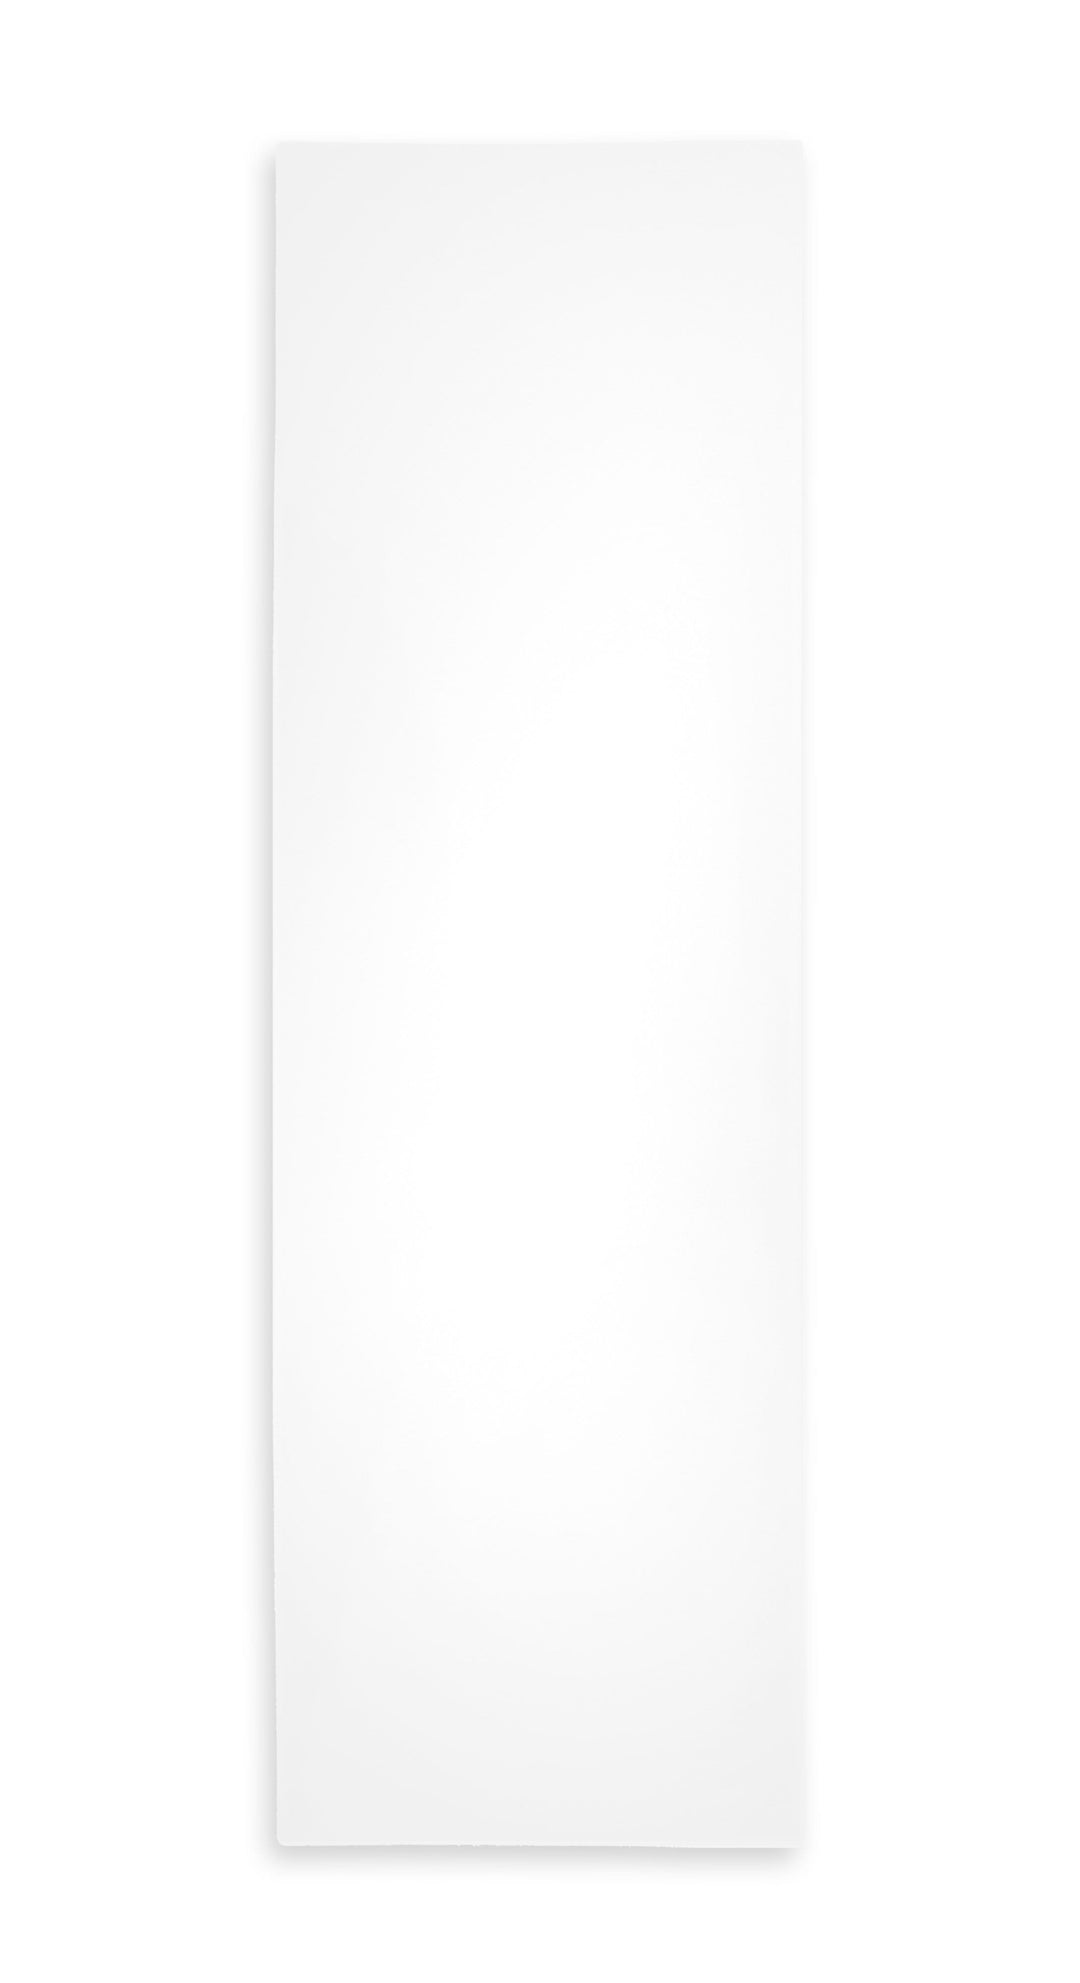 Teak Tuning Pro Duro Grip Tape, White - 35mm x 110mm